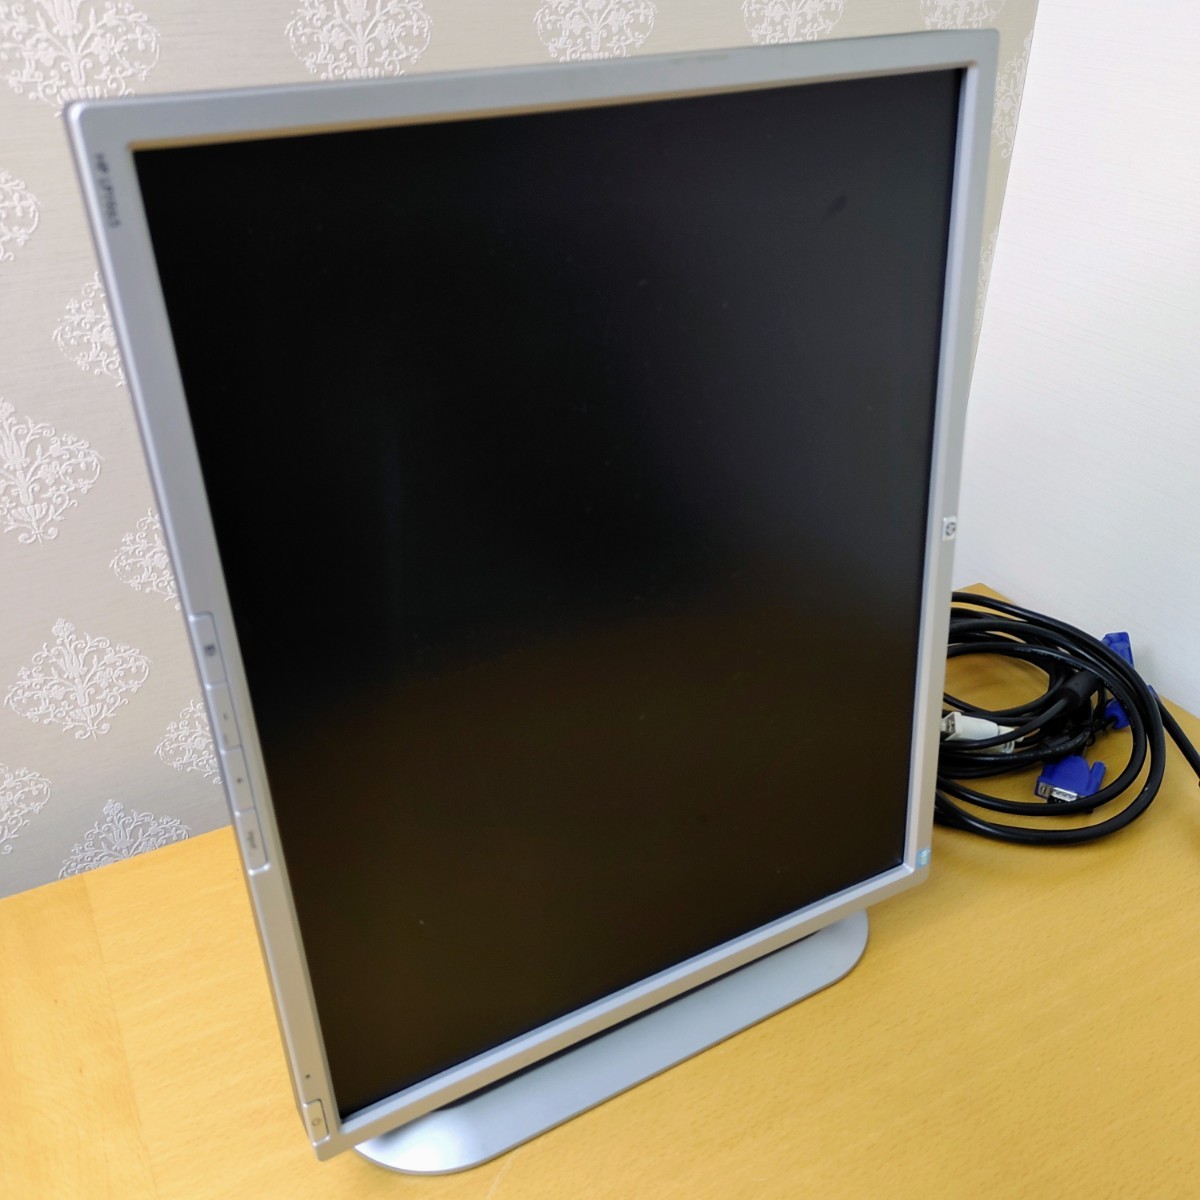 HP*19 inch liquid crystal monitor LP1965 SXGA 1280×1024 length width use yawing OK 2way silver dual display hyu- let * paker do